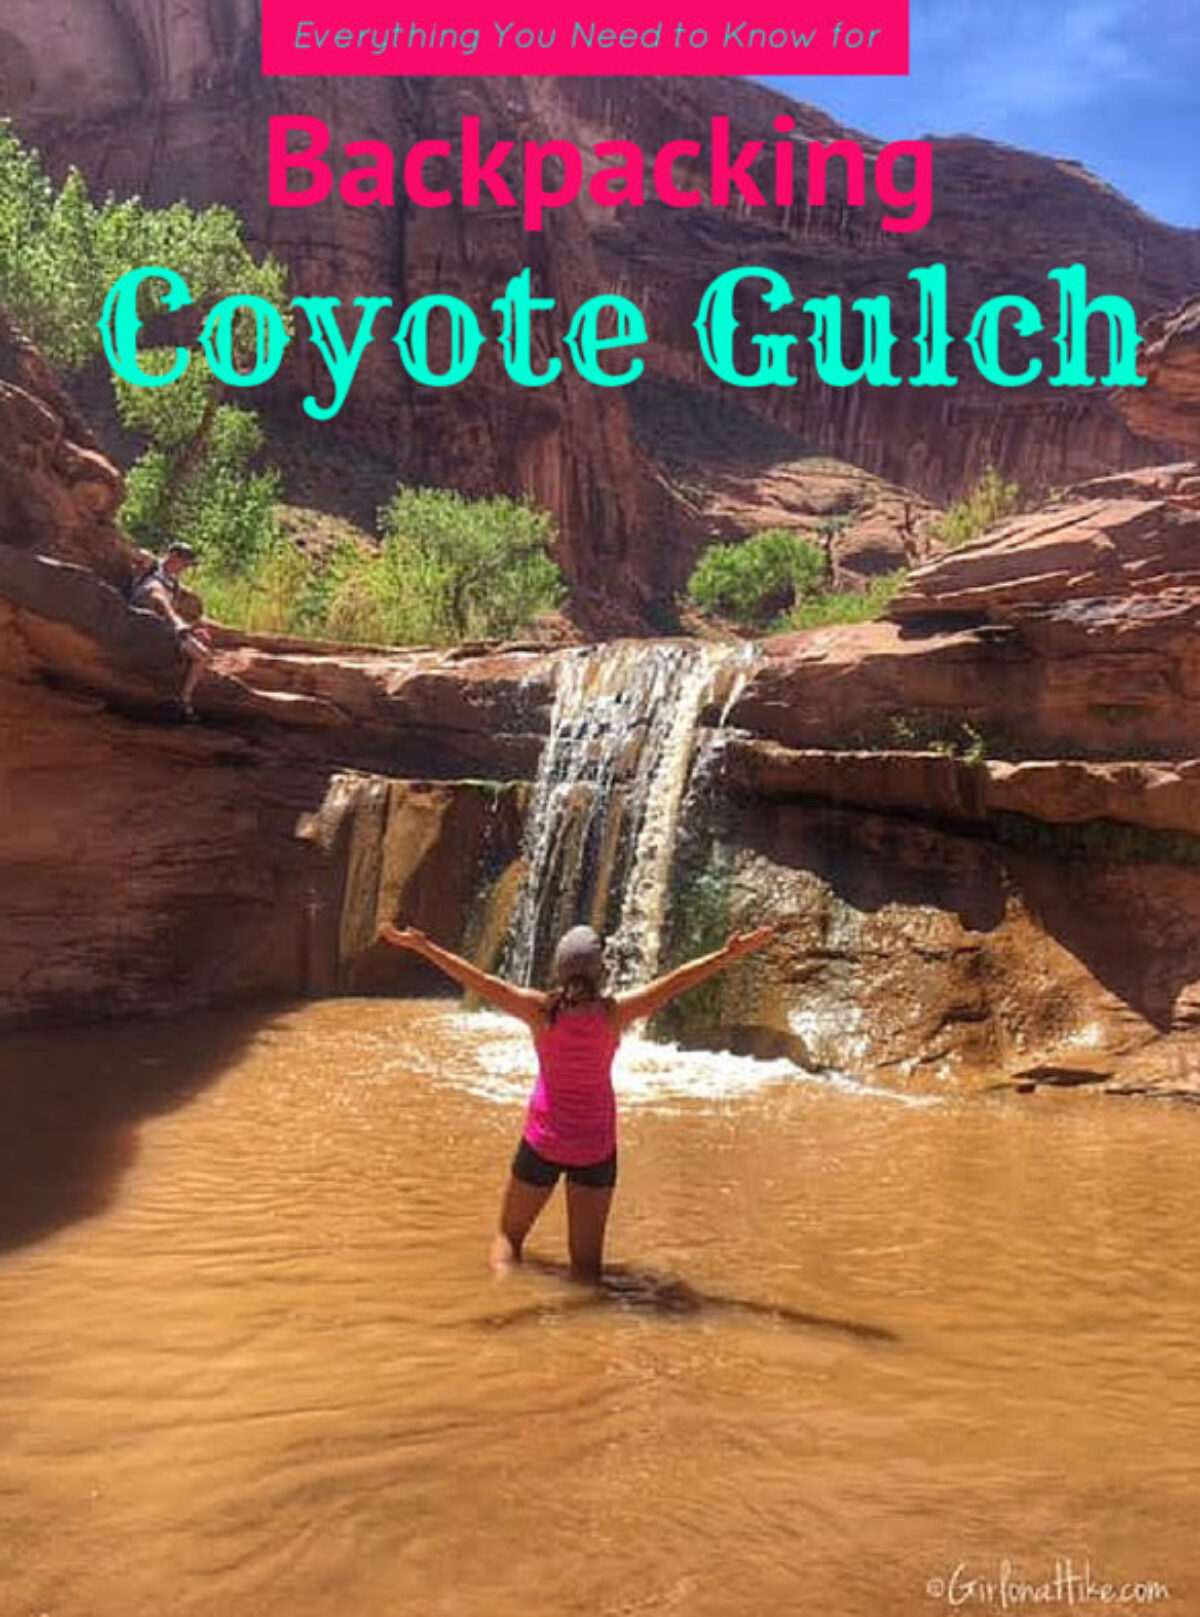 Green River Basin – Coyote Gulch